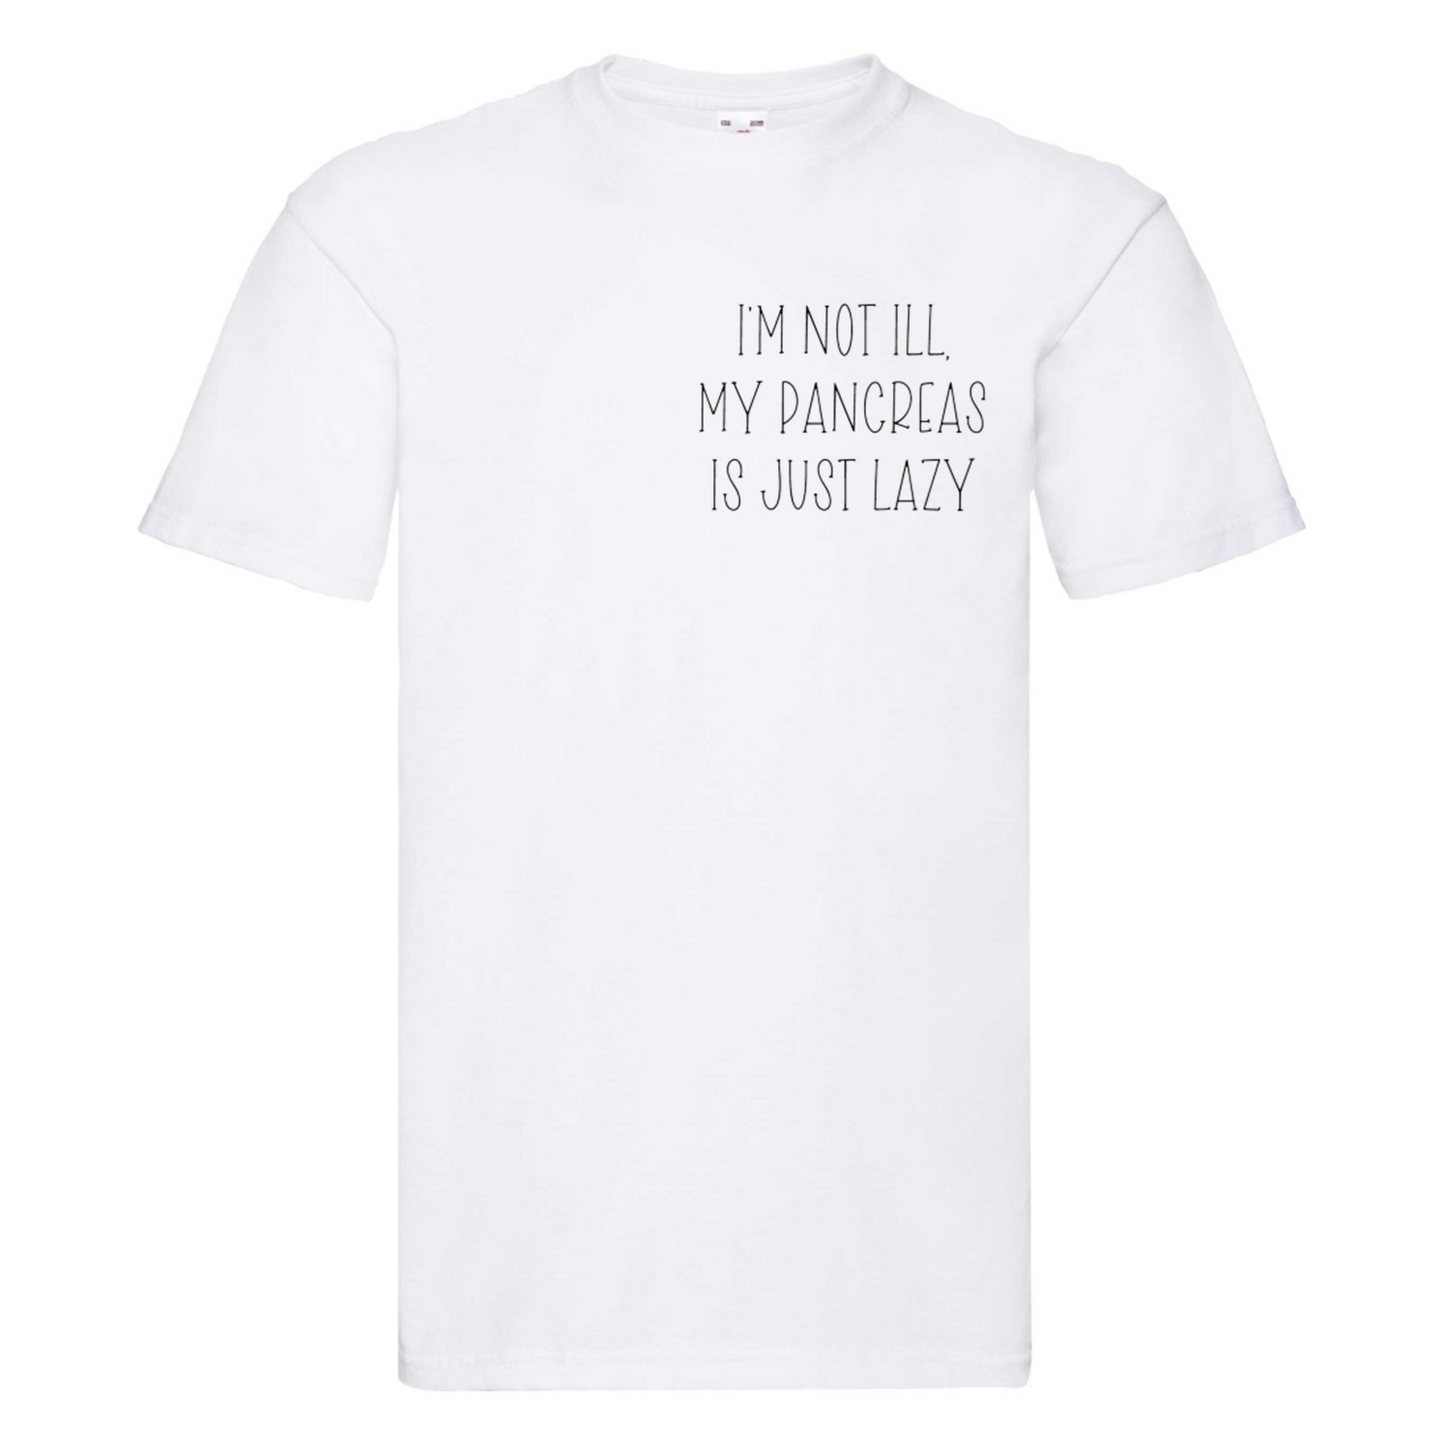 I'm Not Ill, My Pancreas Is Just Lazy Kids T Shirt